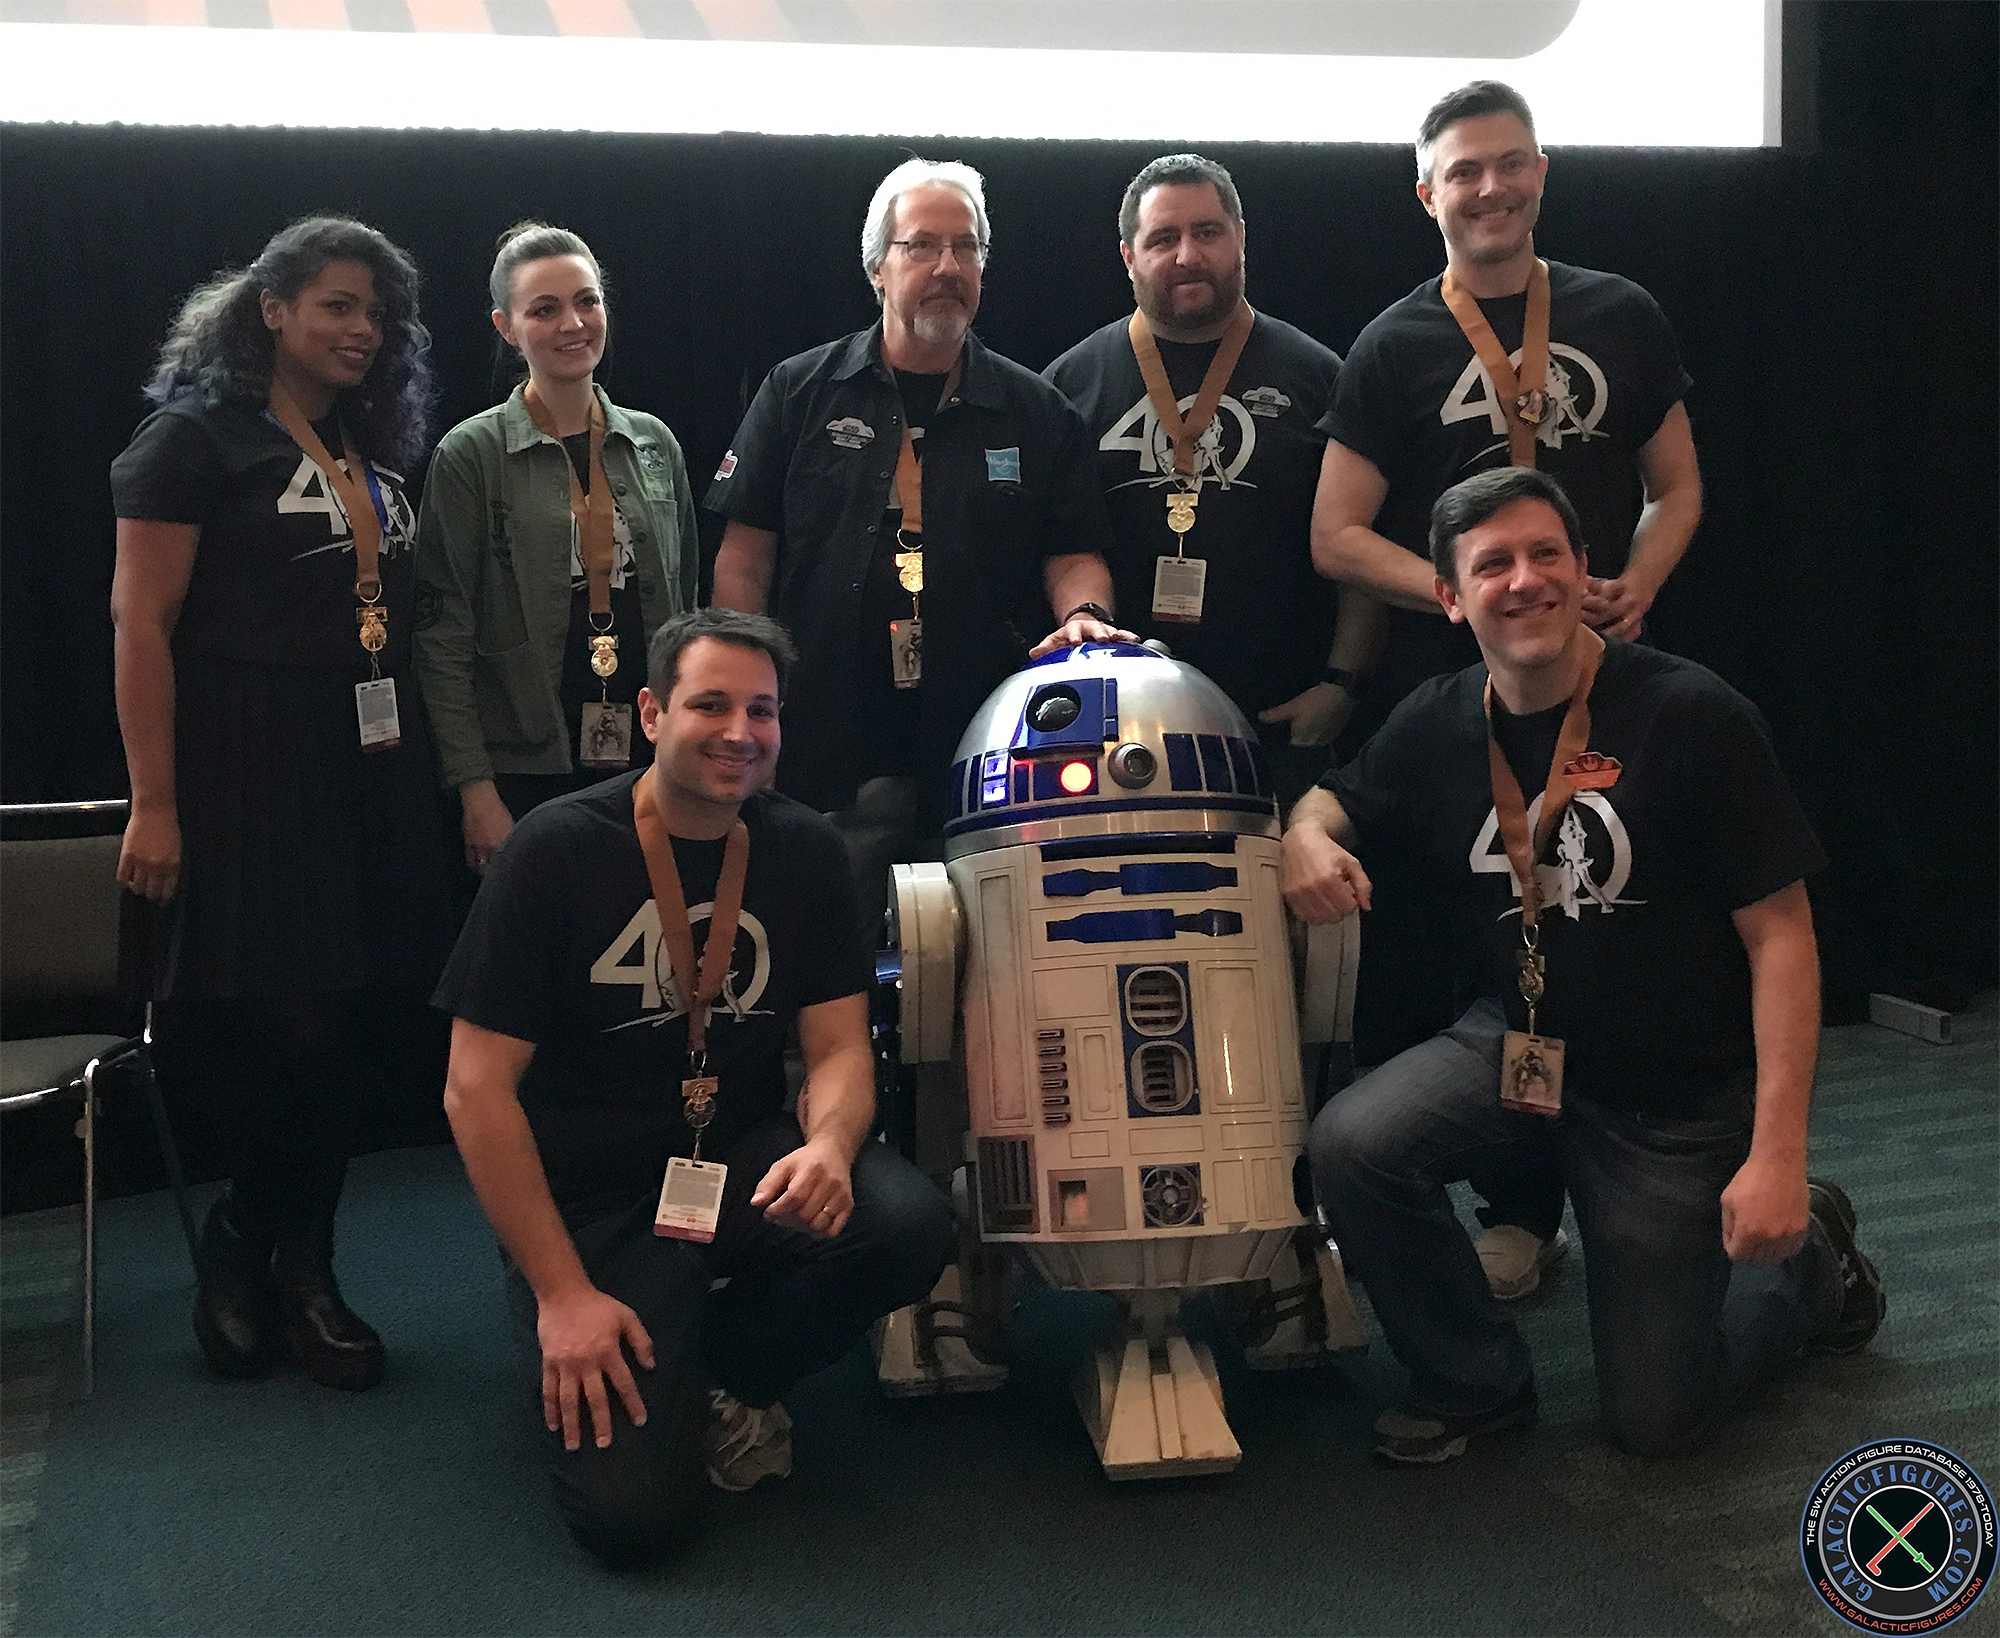 The Hasbro Star Wars Team at Star Wars Celebration 2017